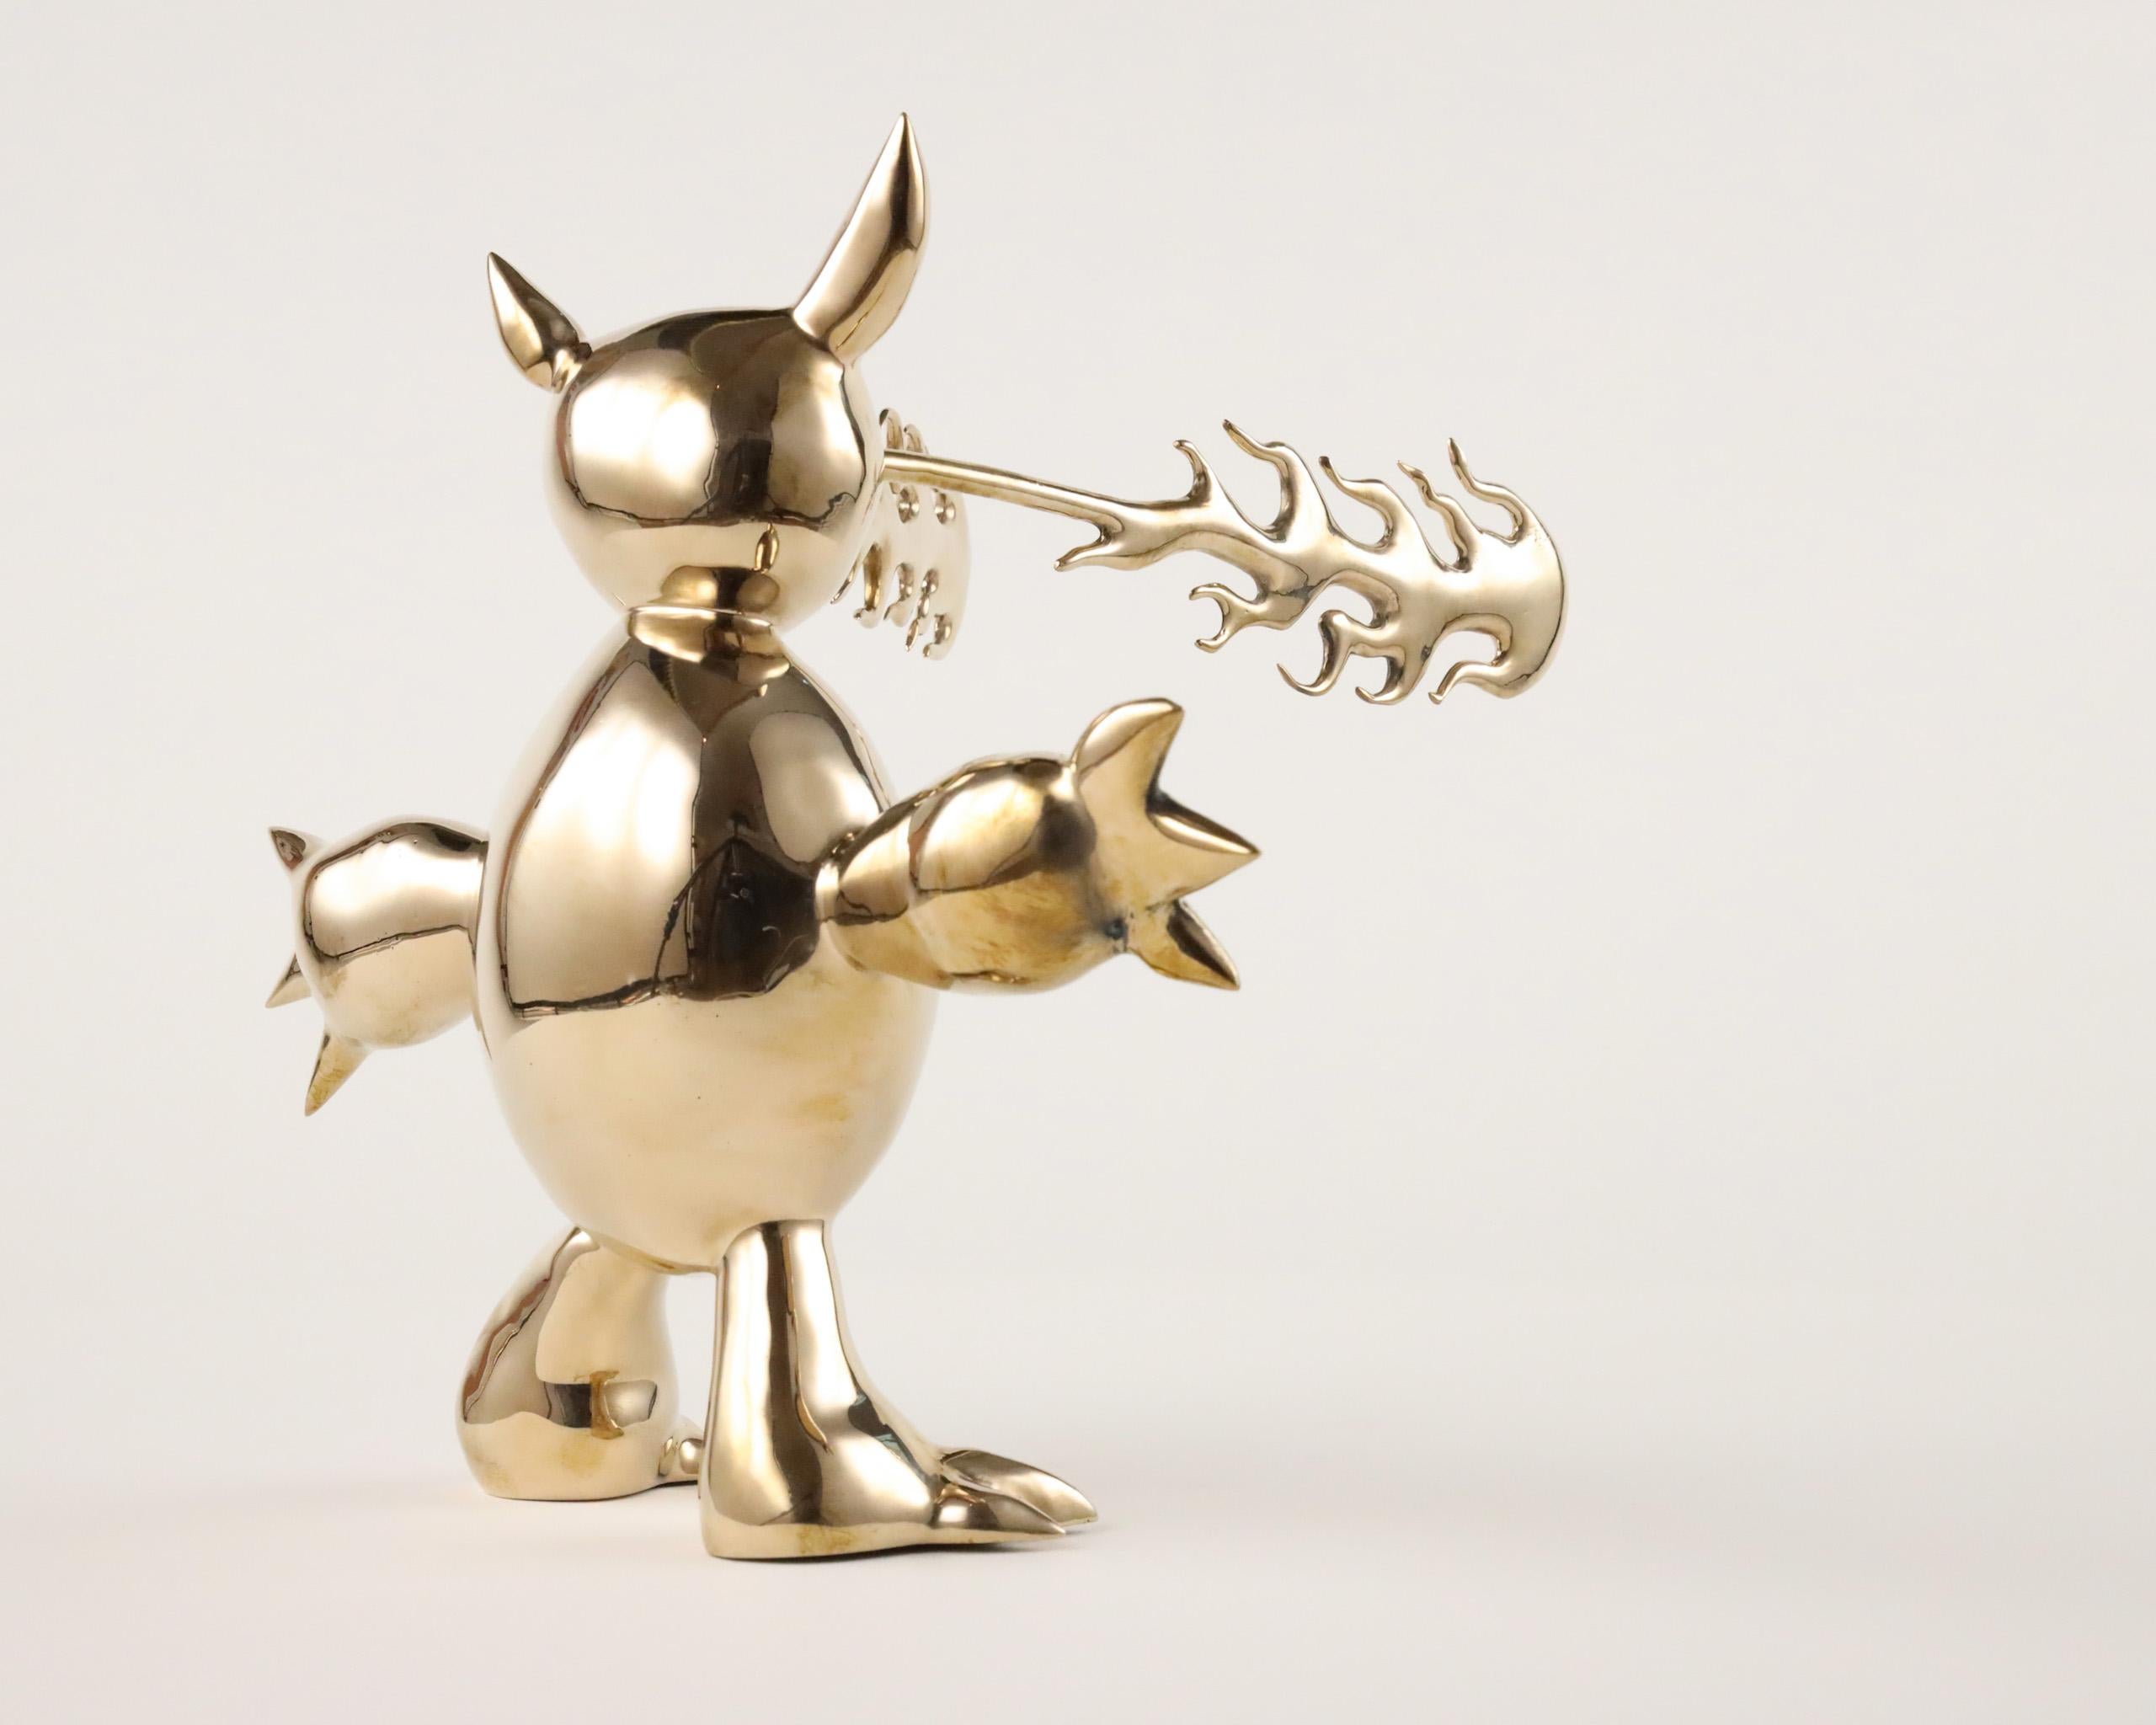 Furious Demon by Marcelo Martin Burgos - Polished bronze sculpture, golden For Sale 14